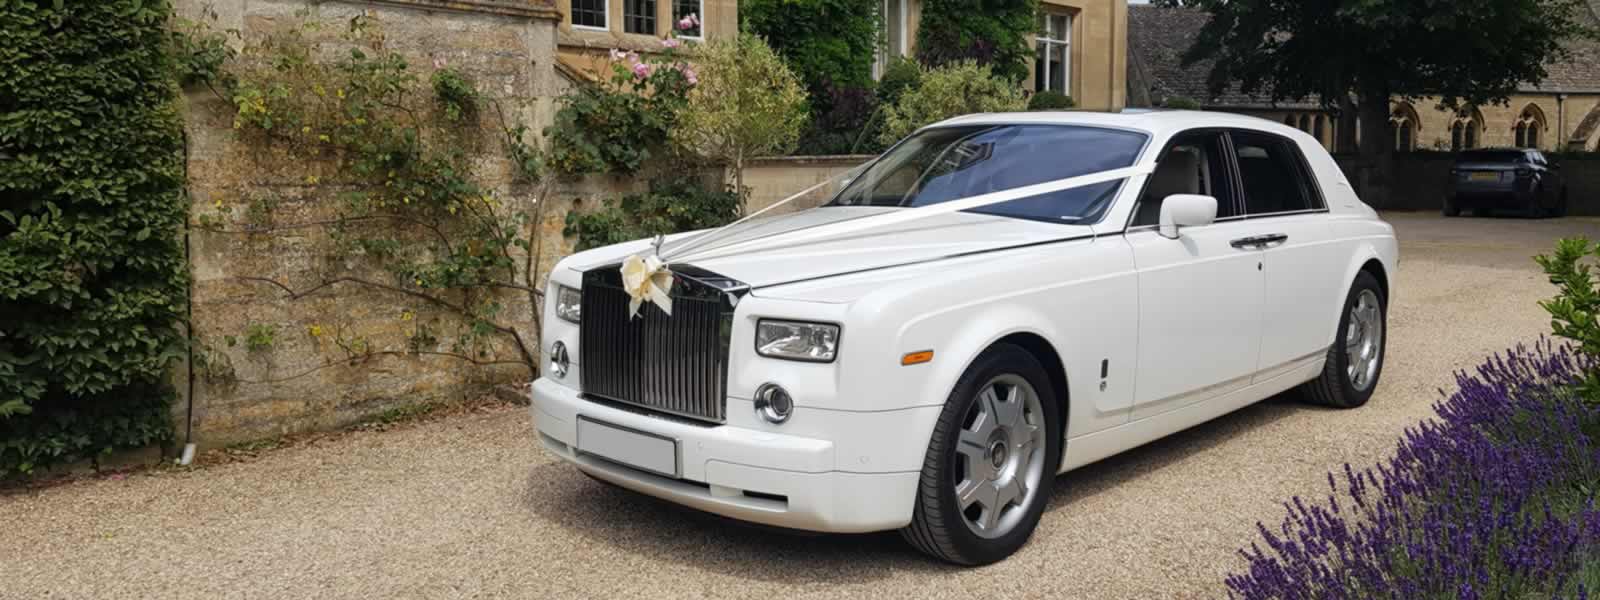 Bedfordshire & Buckingamsire limo hire hero Rolls-Royce wedding car featured